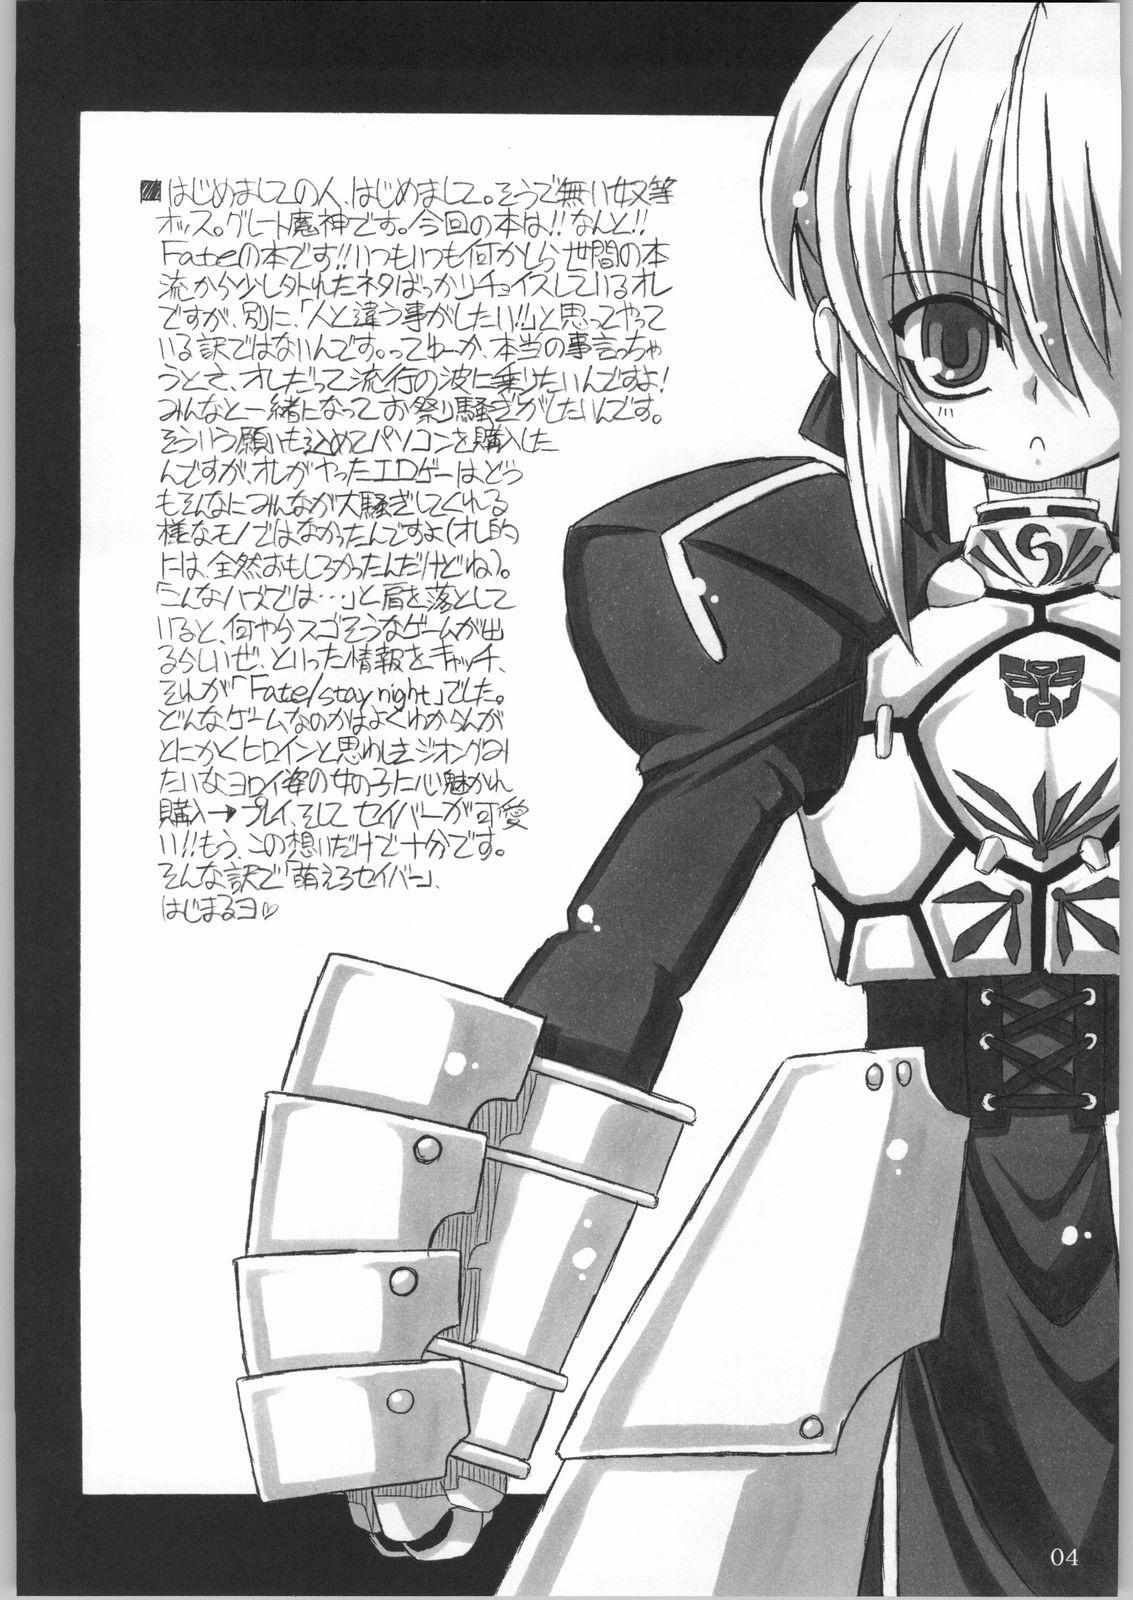 German Entaku No Kishi Monogatari Moero Saber - Fate stay night Dykes - Page 3